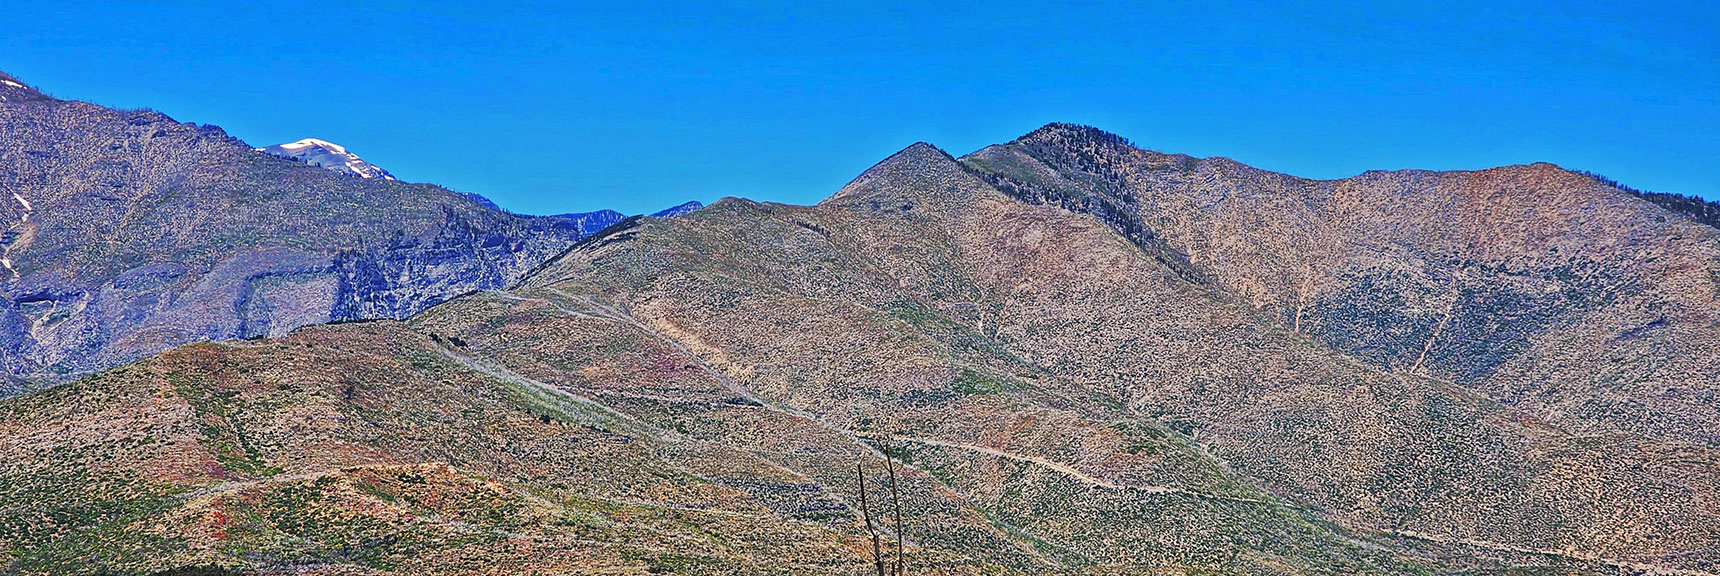 Wilson Ridge To Harris Mountain. Harris Mt. Road Visible. | Wilson Ridge Lovell Canyon Loop | Lovell Canyon, Nevada